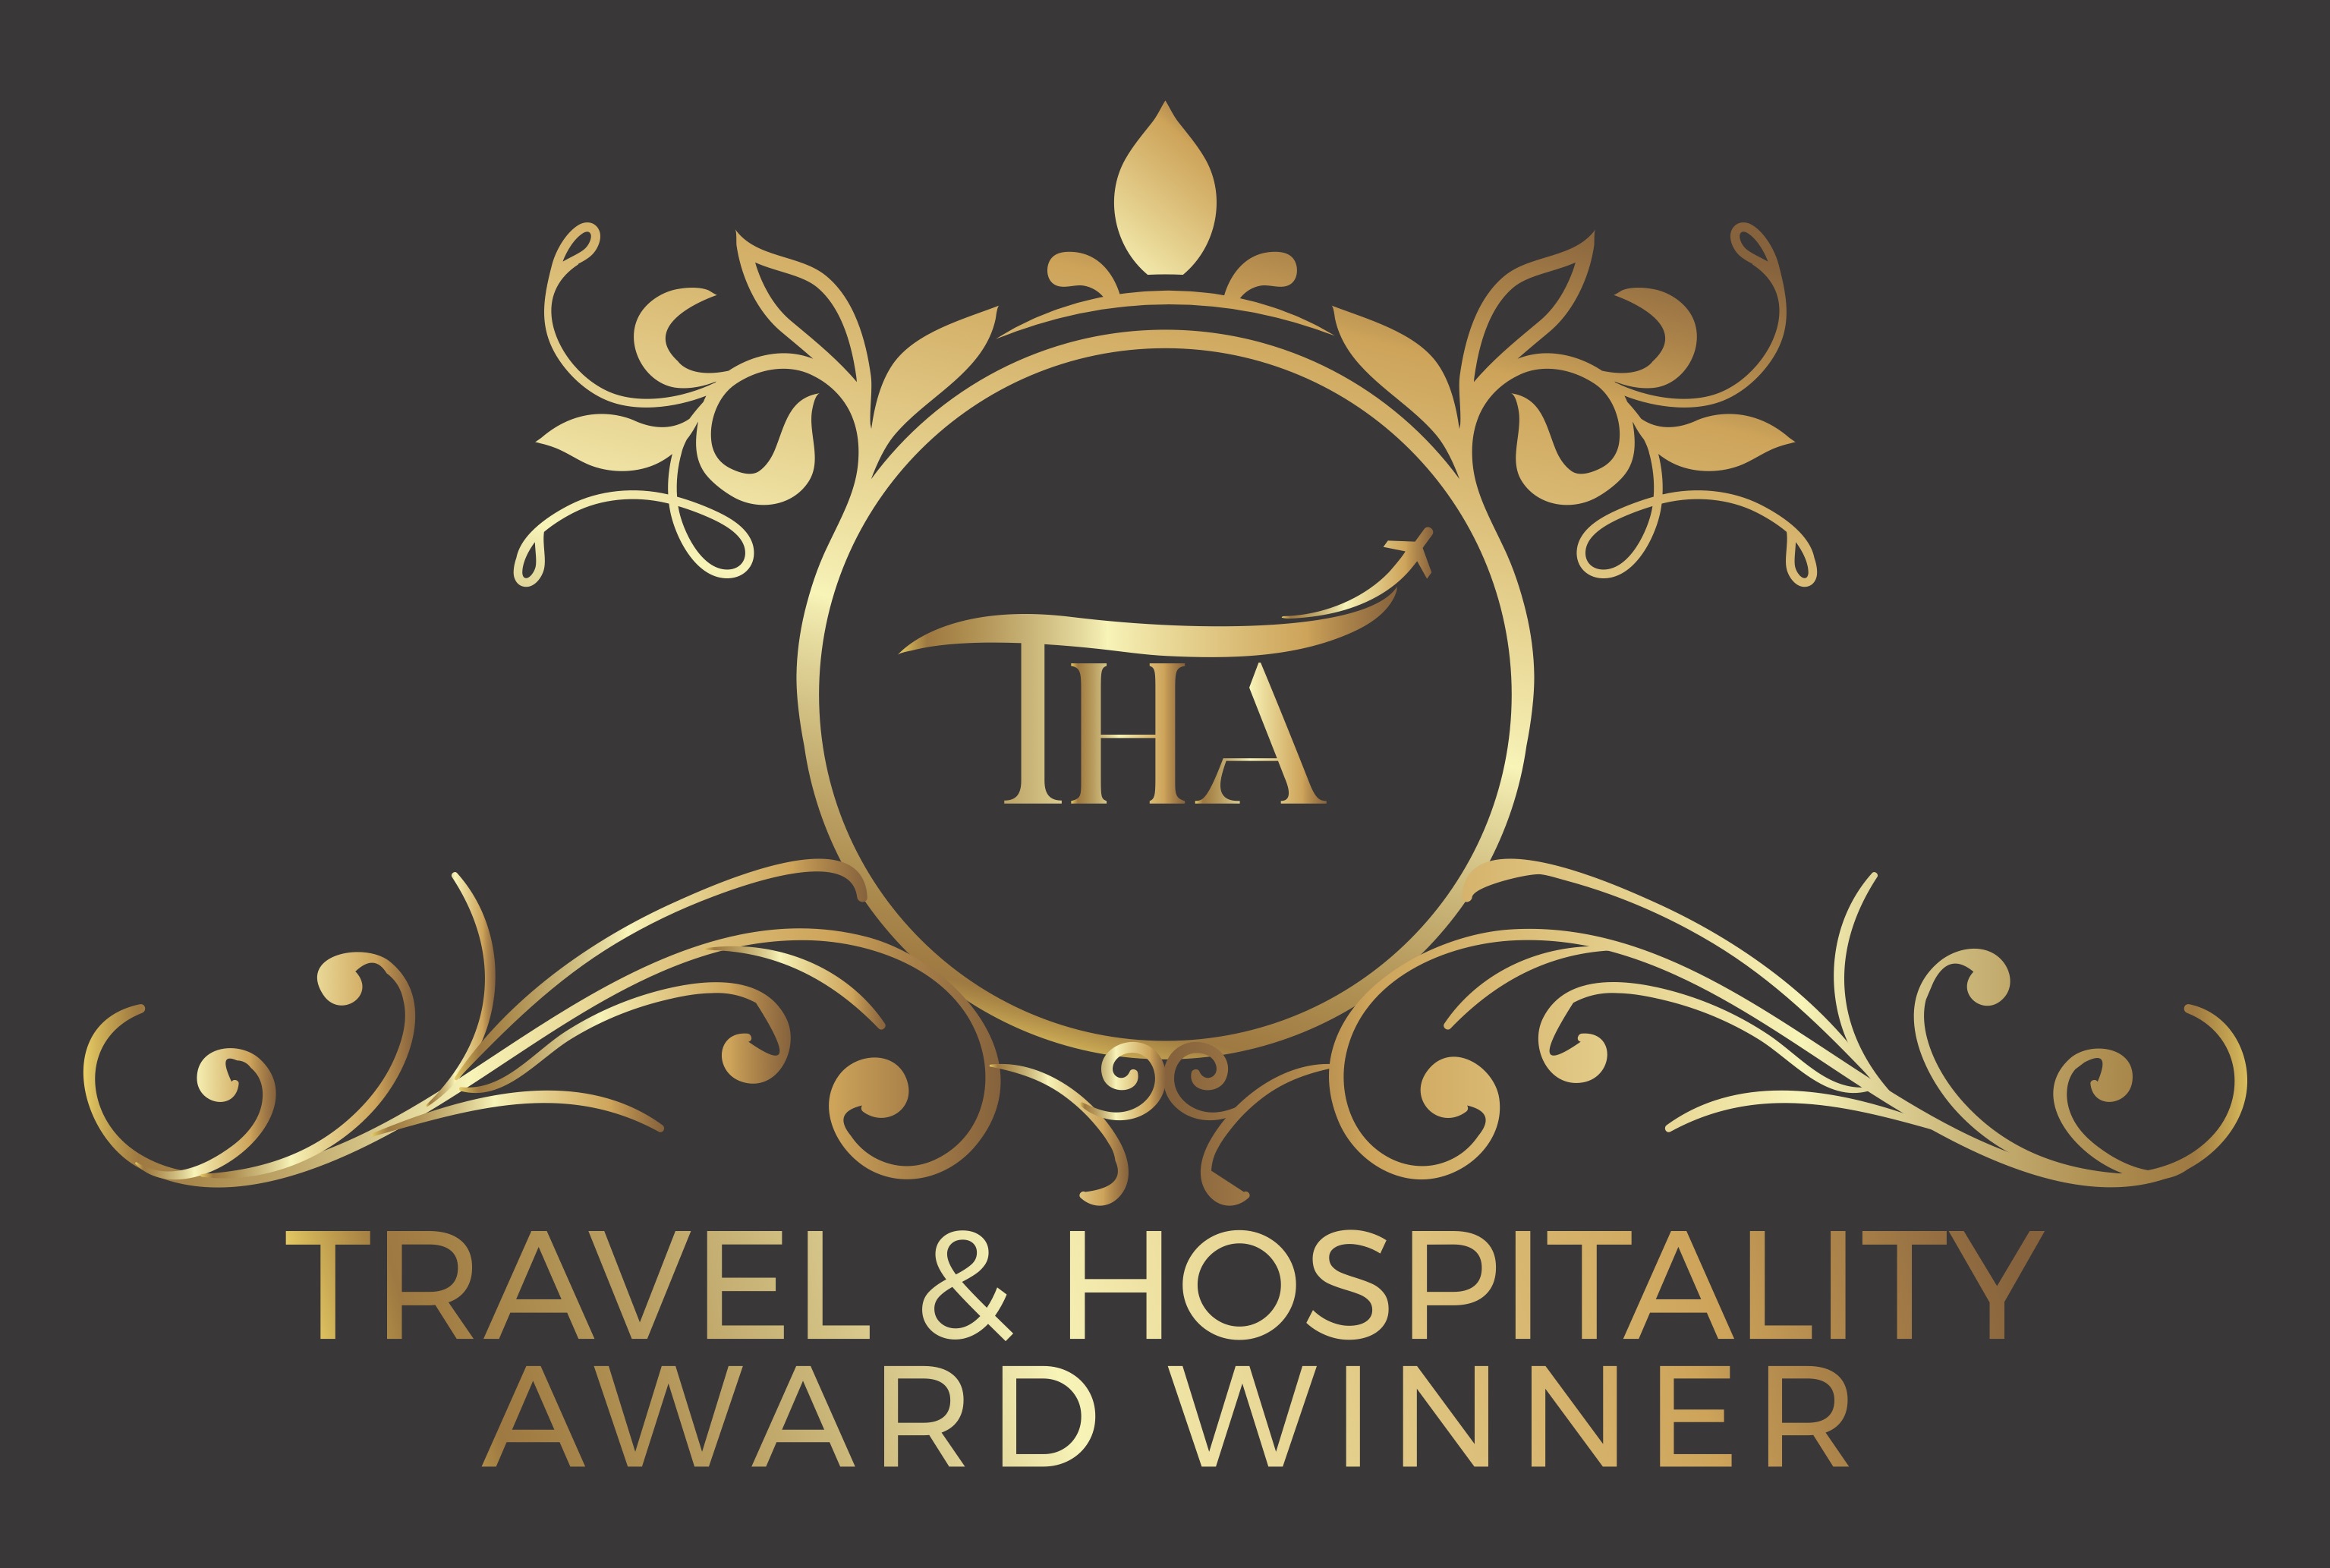 Hotels & Hospitality Awards